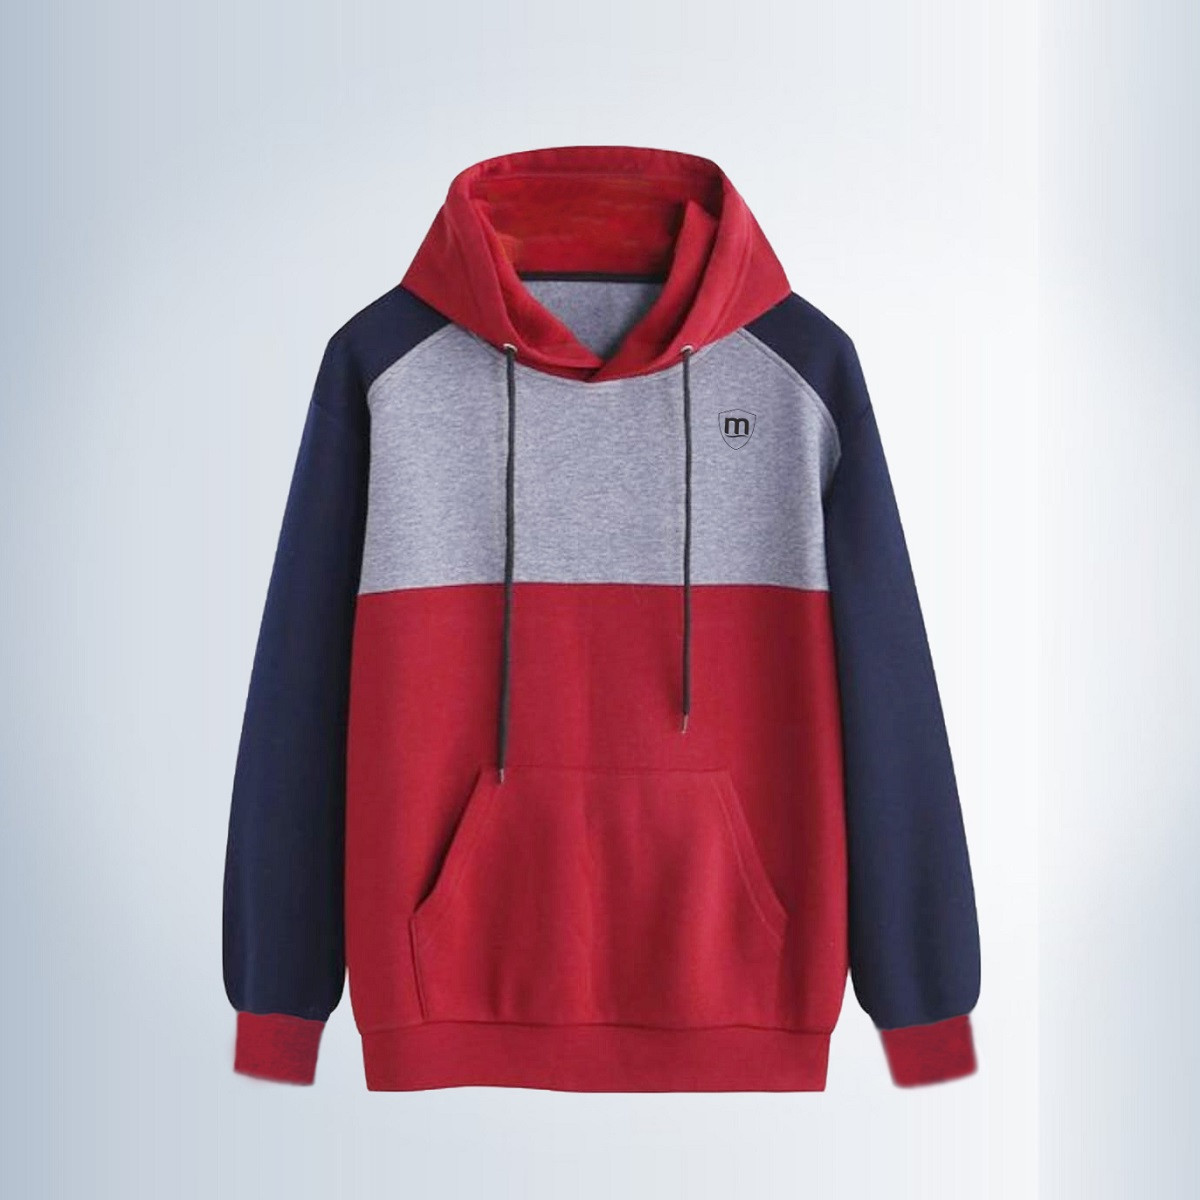 Men's winter hoodie -Red Hood Product Code: 3033